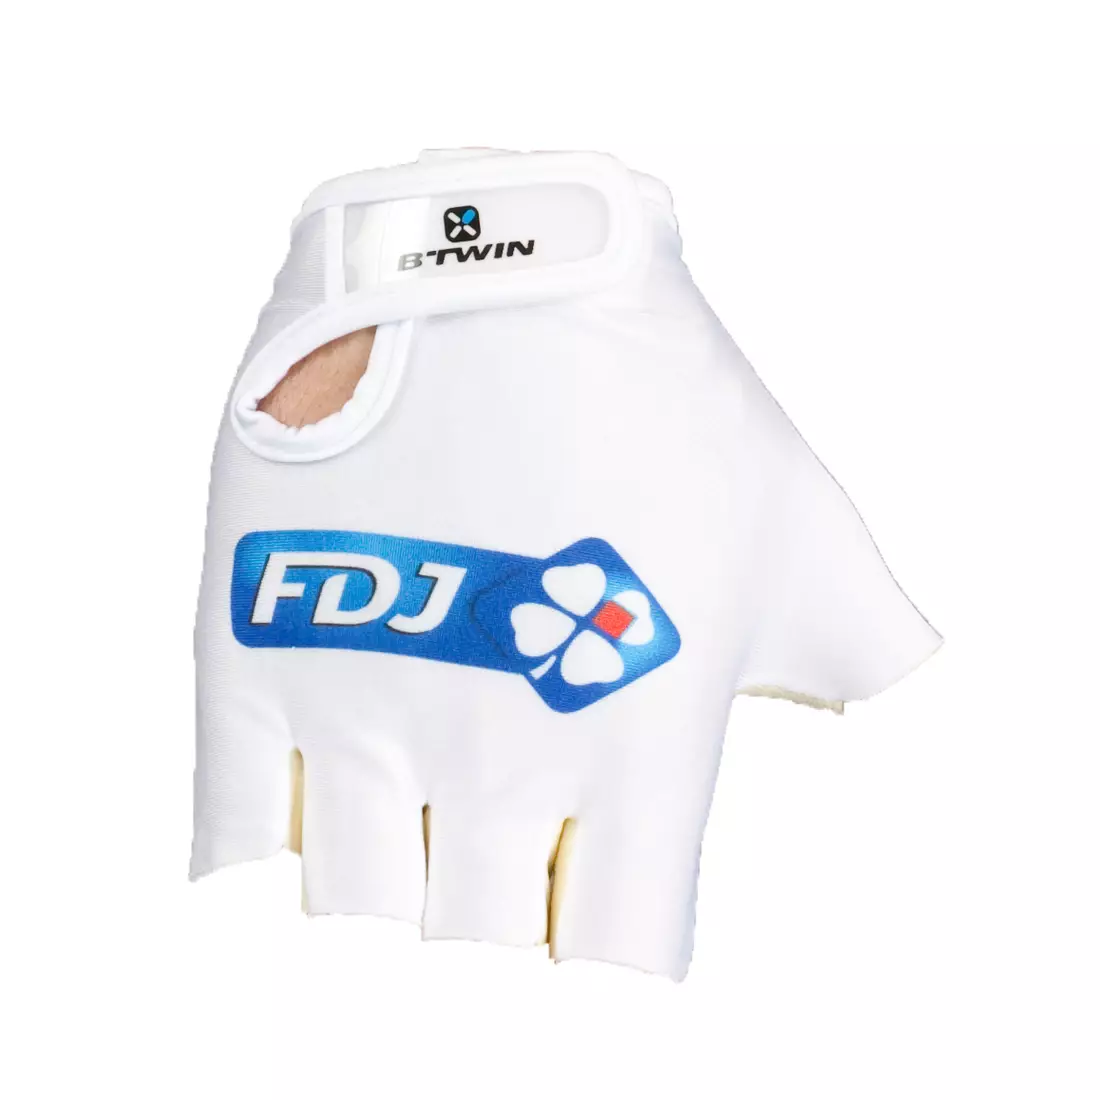 Cyklistické rukavice TEAM FDJ 2016